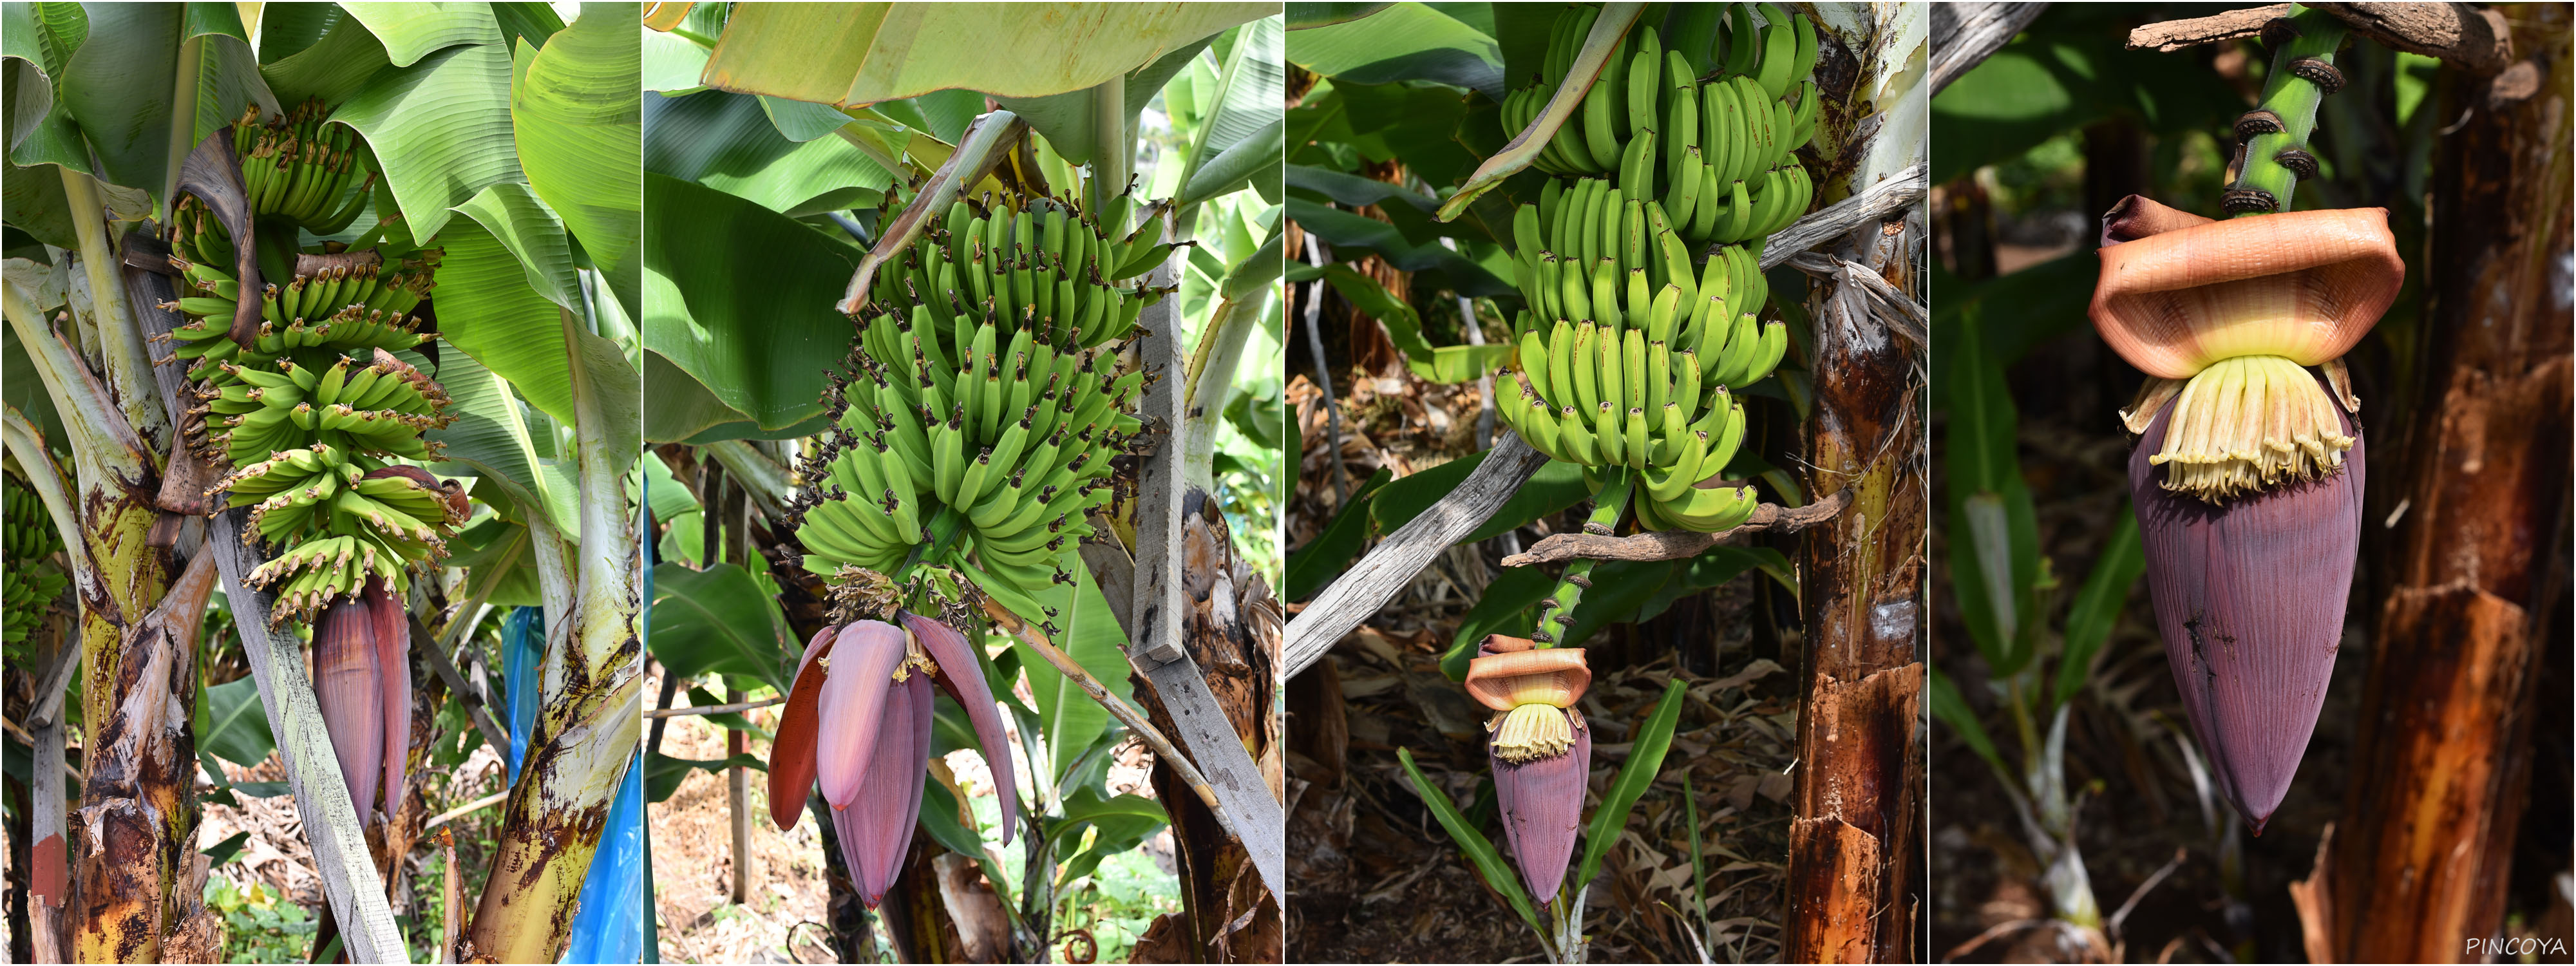 „Bananen-Stauden sind echt photogen, dass hatten wir gar nicht gedacht“